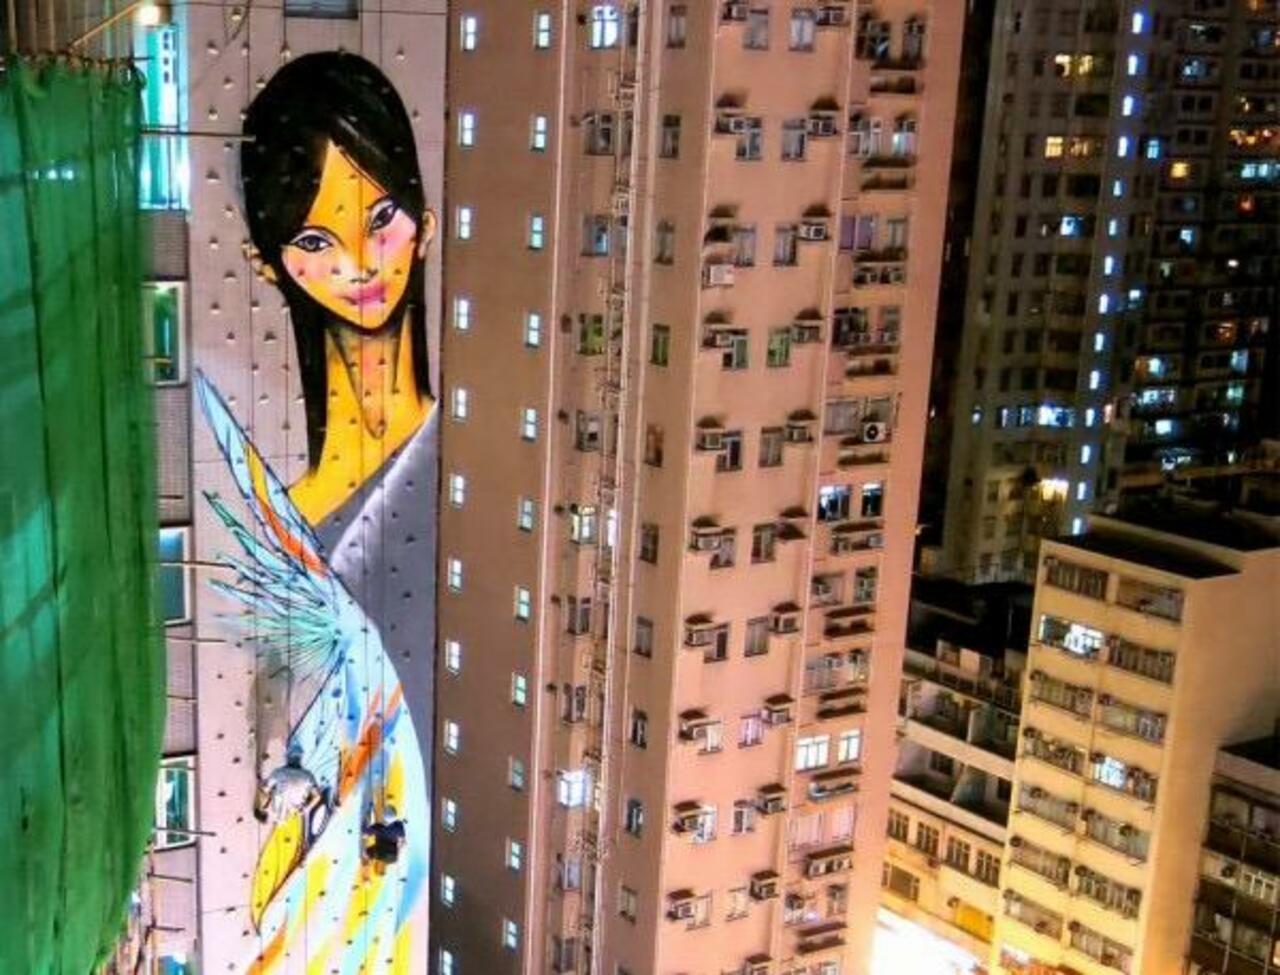 Two One & Shida
Hong Kong 
#streetart #art #graffiti #mural http://t.co/iTRl8LoAij